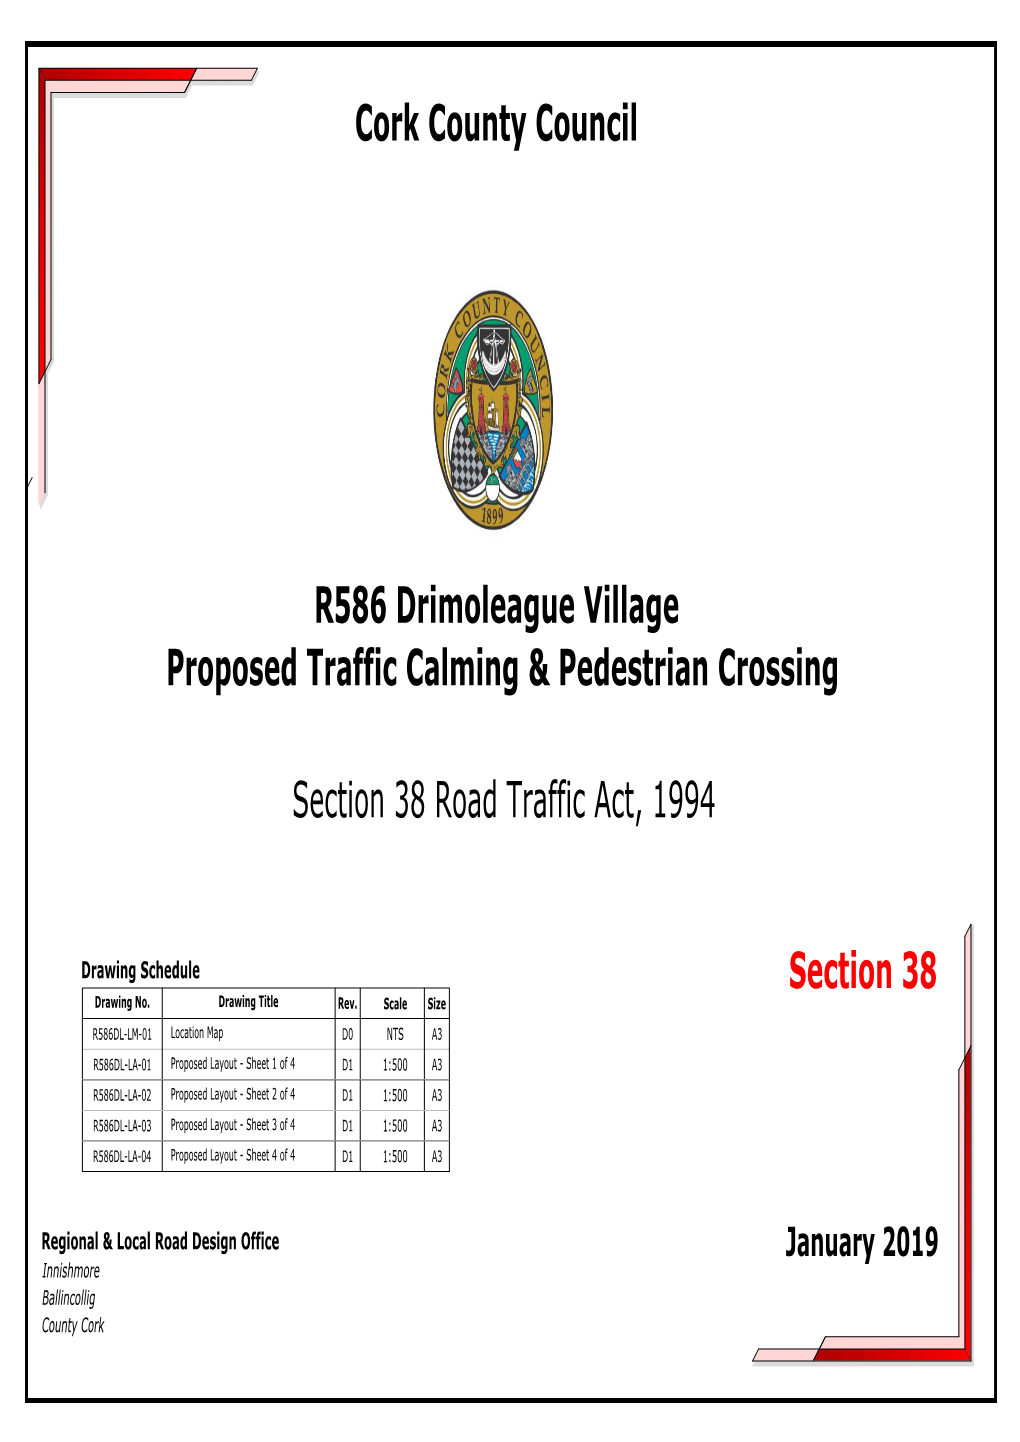 R586 Drimoleague Village Pedestrian Crossing & Traffic Calming